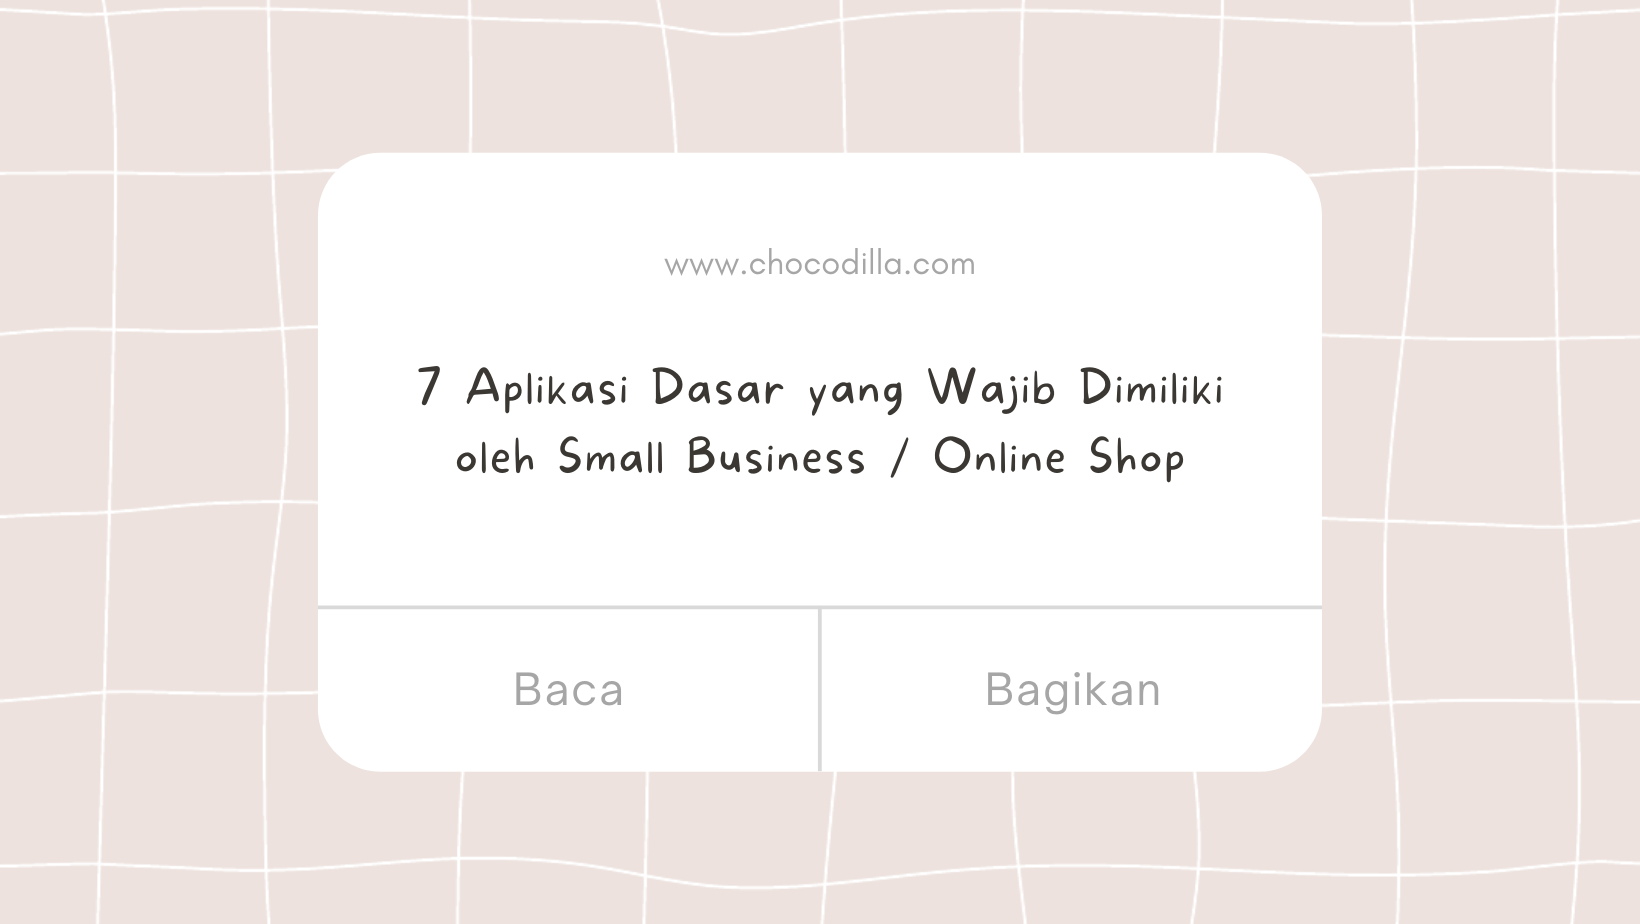 7 Aplikasi Dasar yang Wajib Dimiliki oleh Small Business / Online Shop